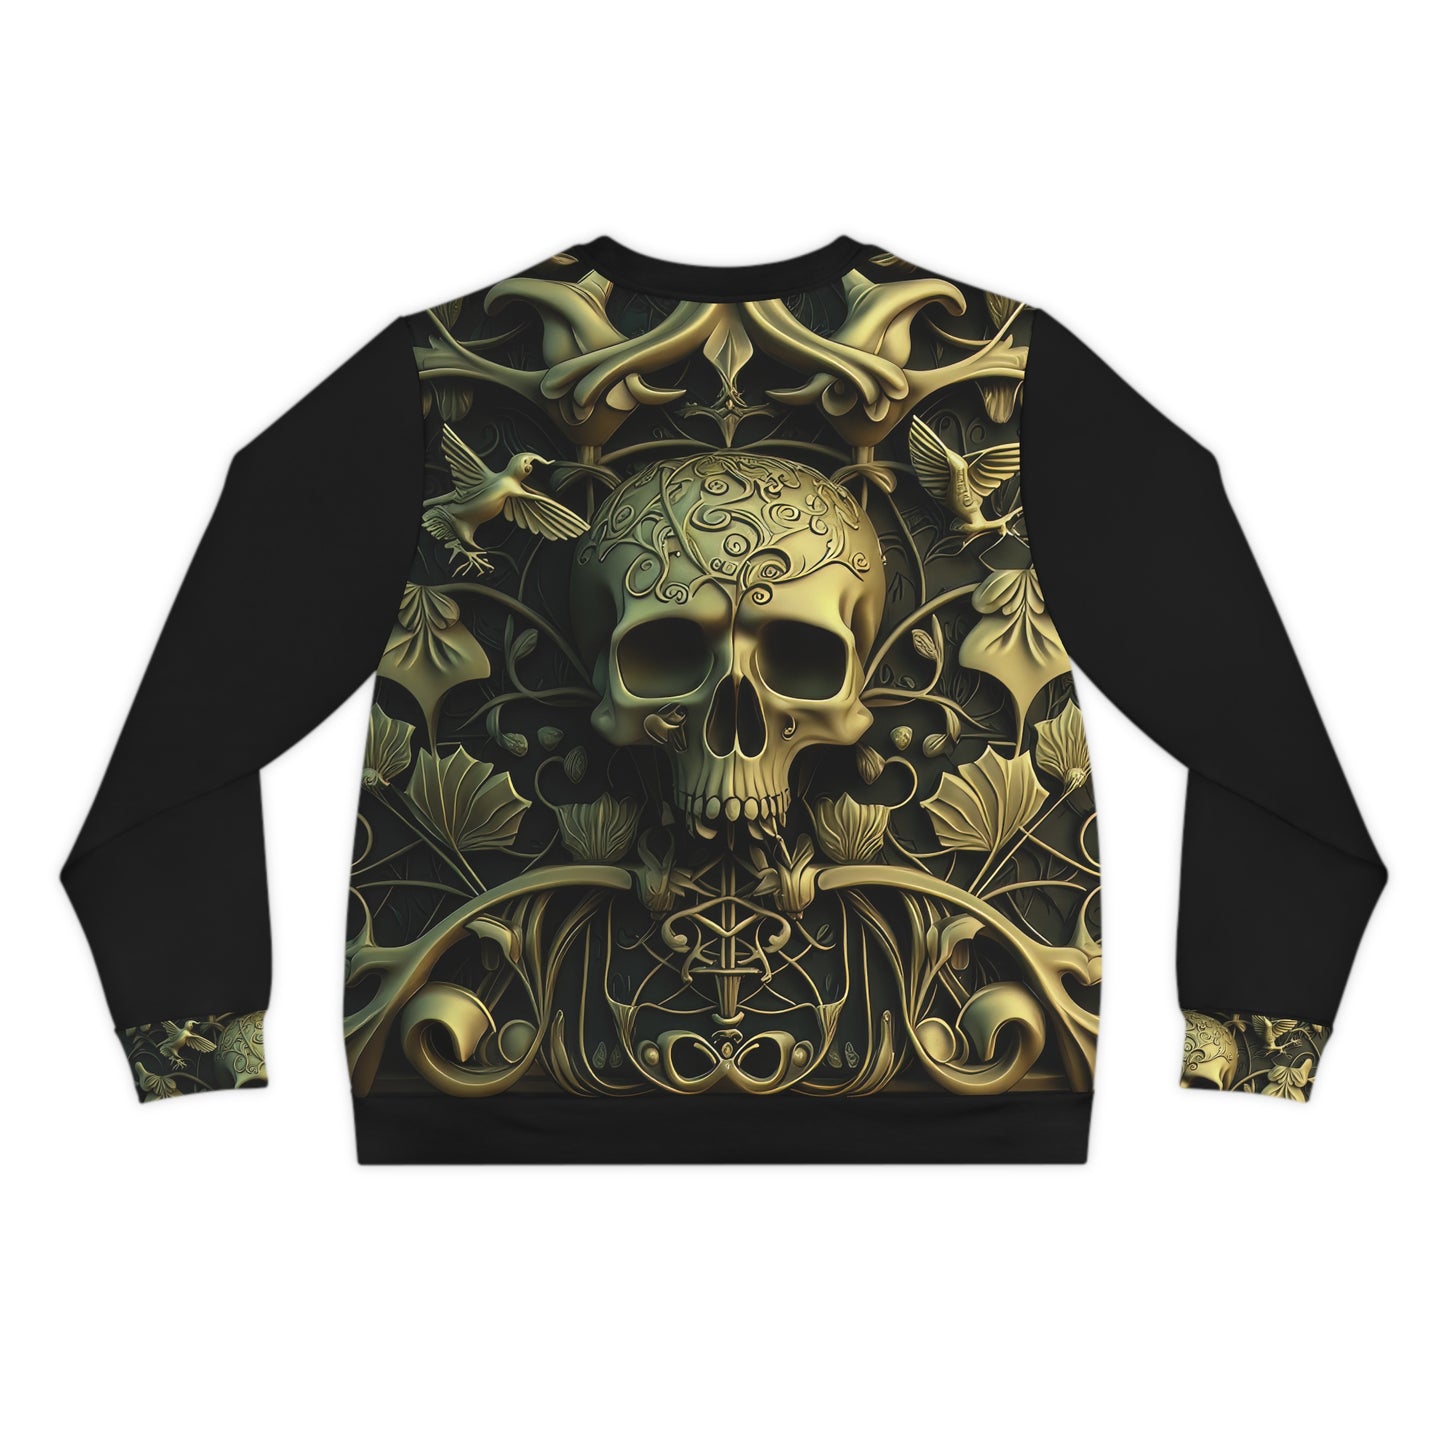 Metallic Chrome Skull and classic Designed Background Style 1 Lightweight Sweatshirt (AOP)